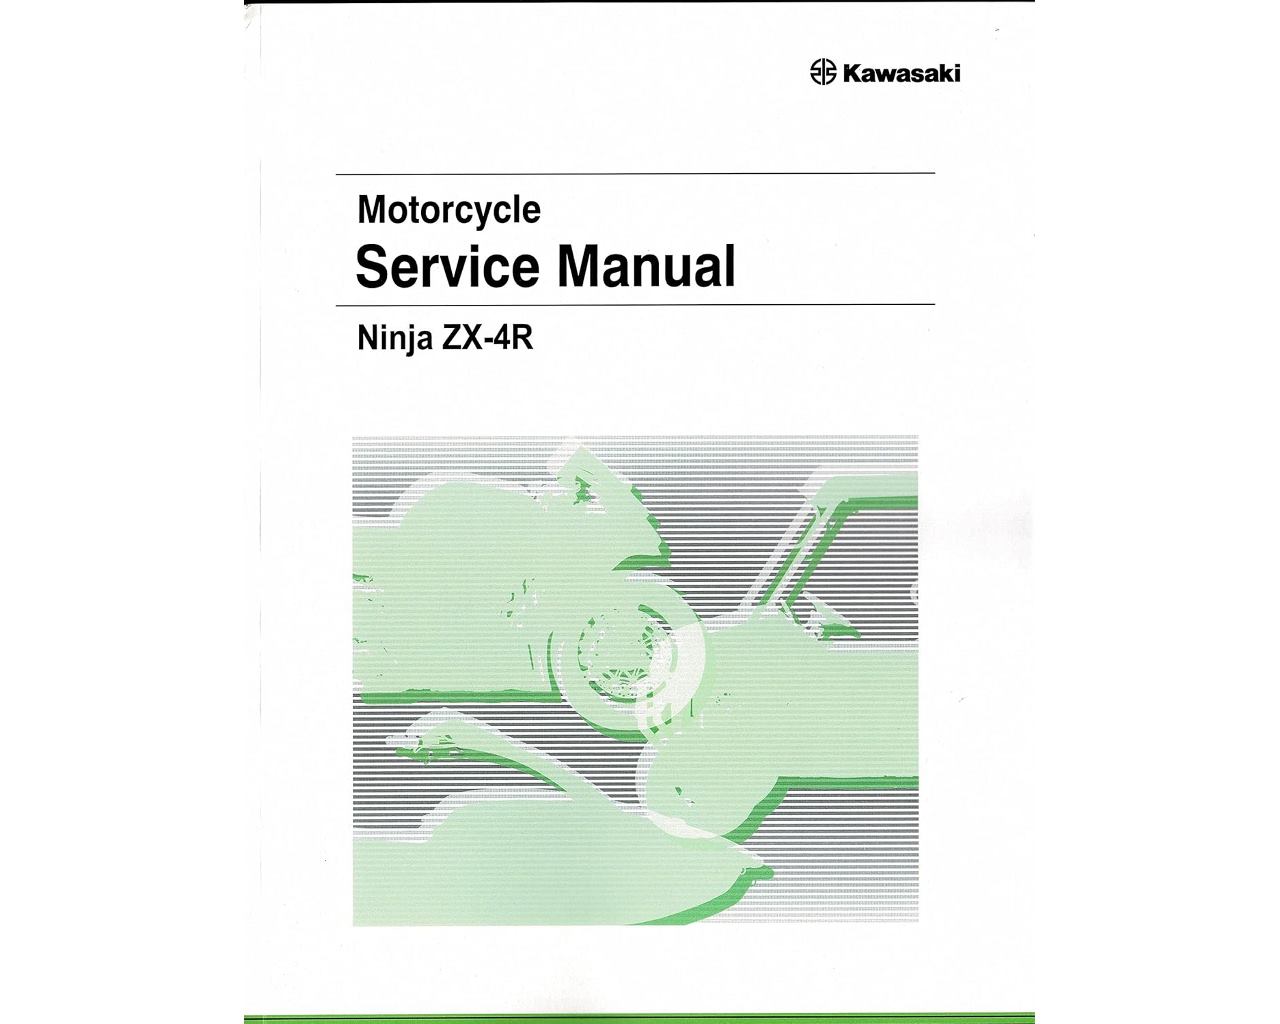 Service Manuals – Koup's Cycle Shop